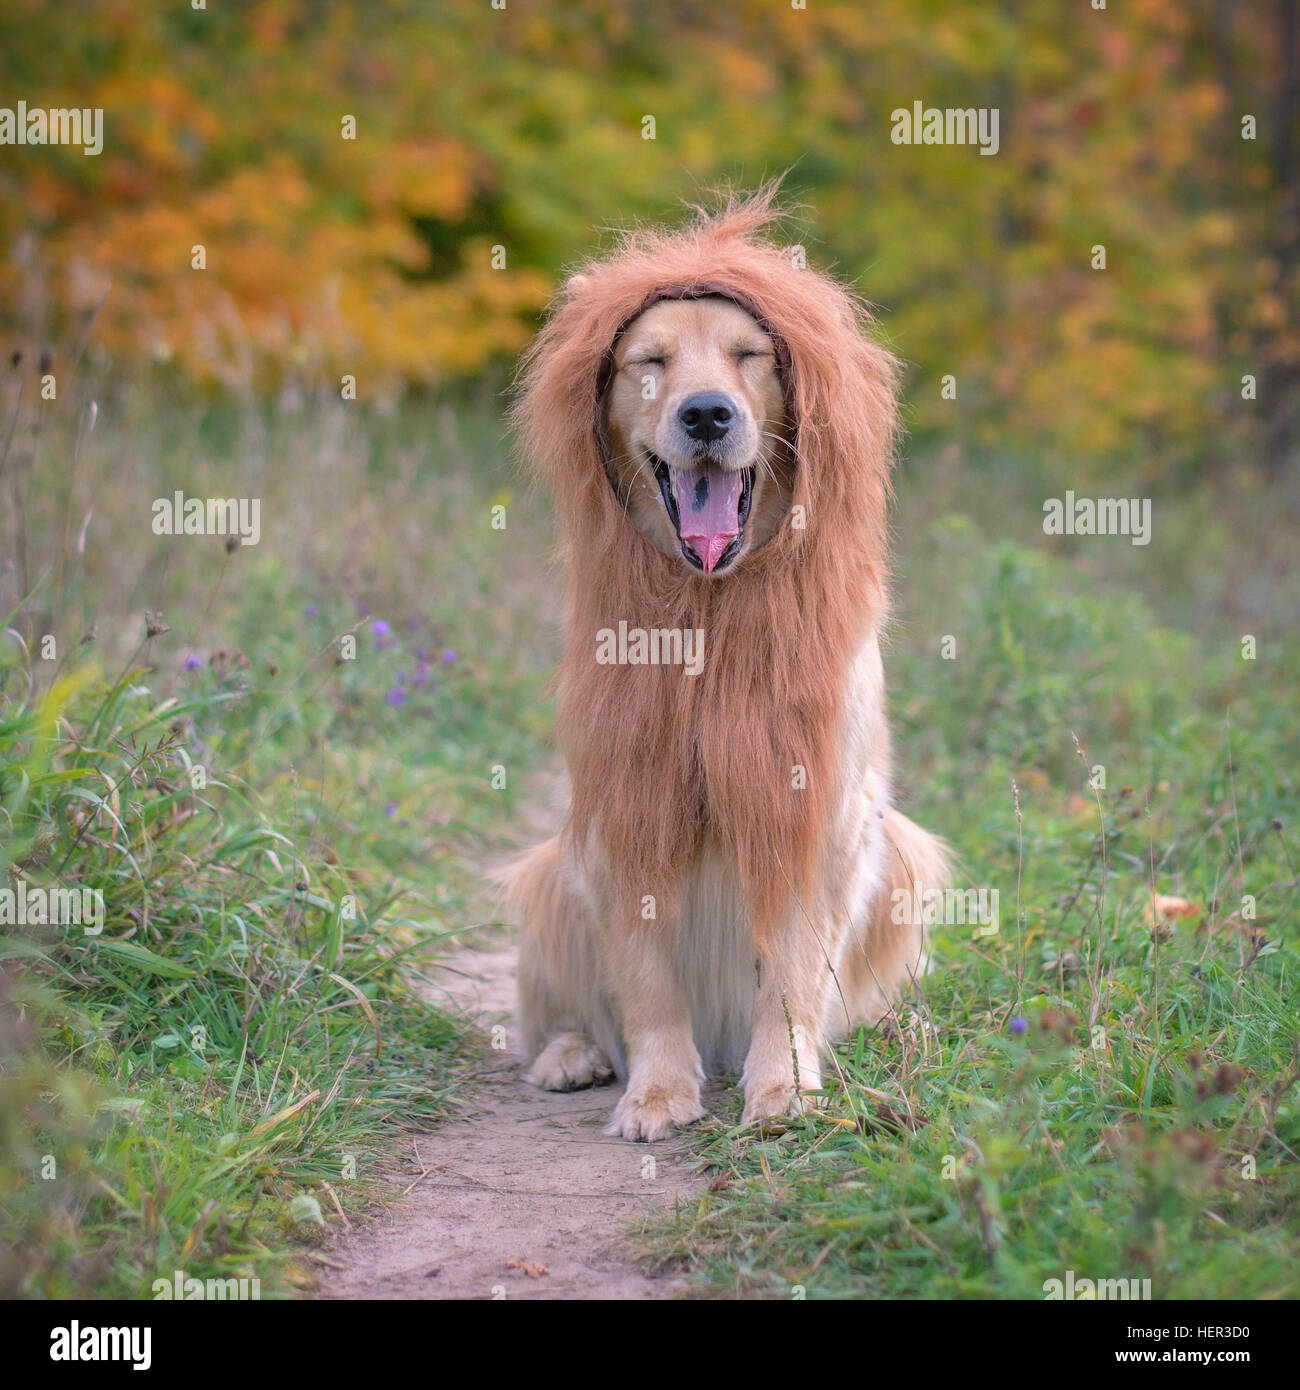 Perro con melena de león fotografías e imágenes de alta resolución - Alamy